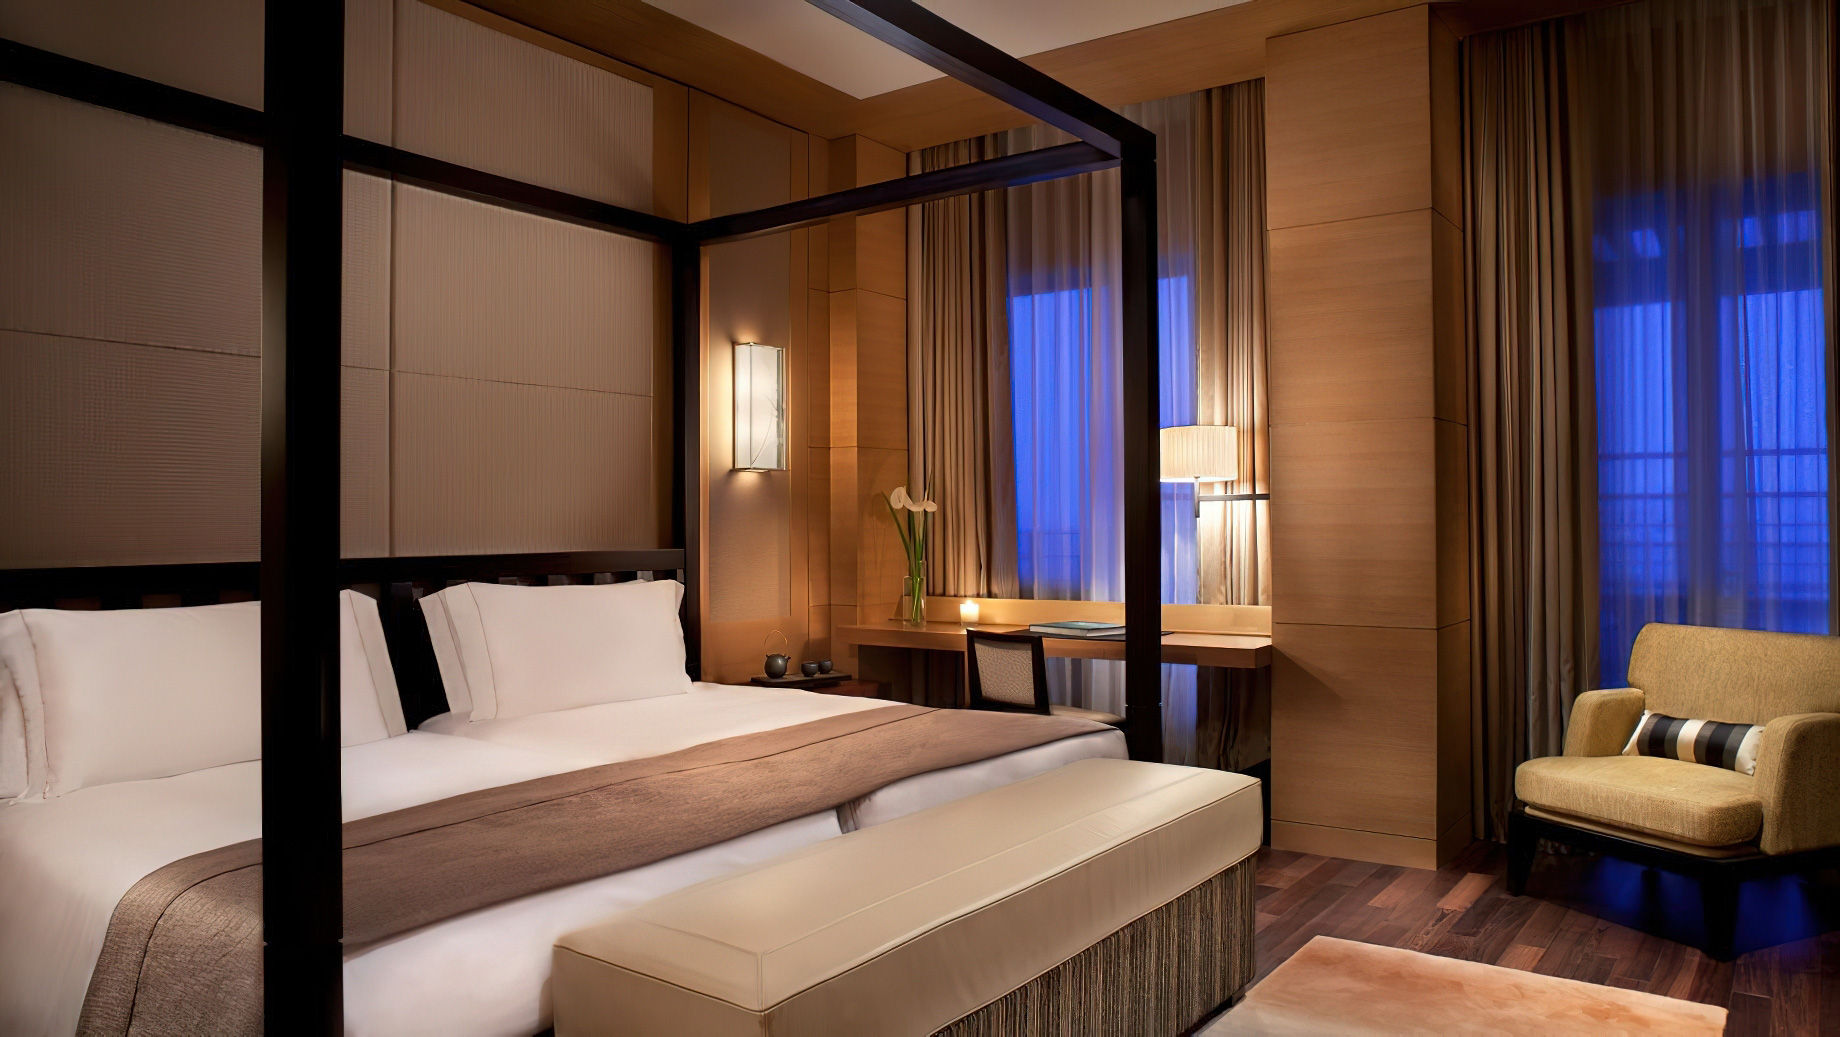 The Ritz-Carlton, Okinawa Hotel – Okinawa, Japan – Ritz-Carlton Suite Bedroom